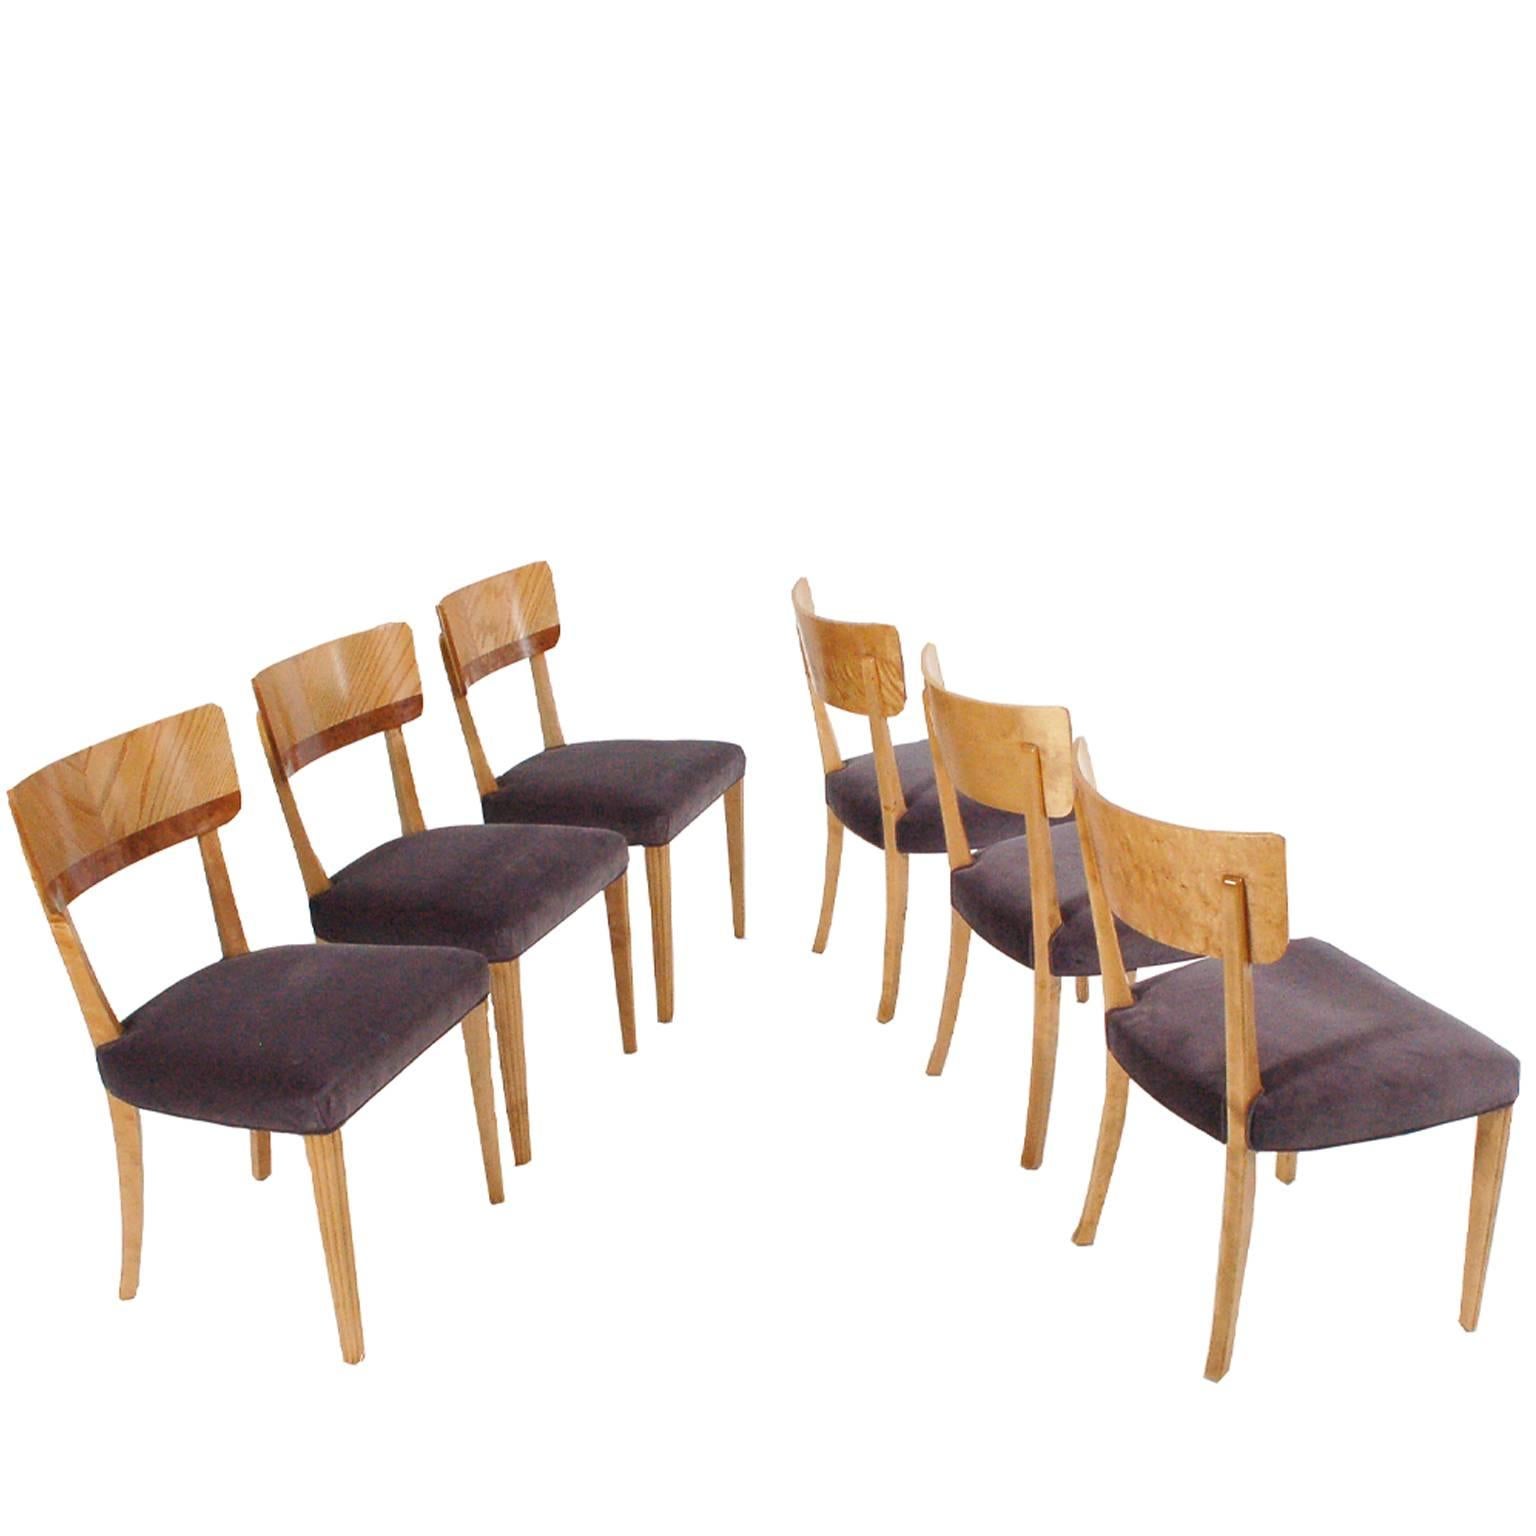 Scandinavian Modern Set of Six Swedish Dining Chairs by Mjolby Intarsia, 1940s